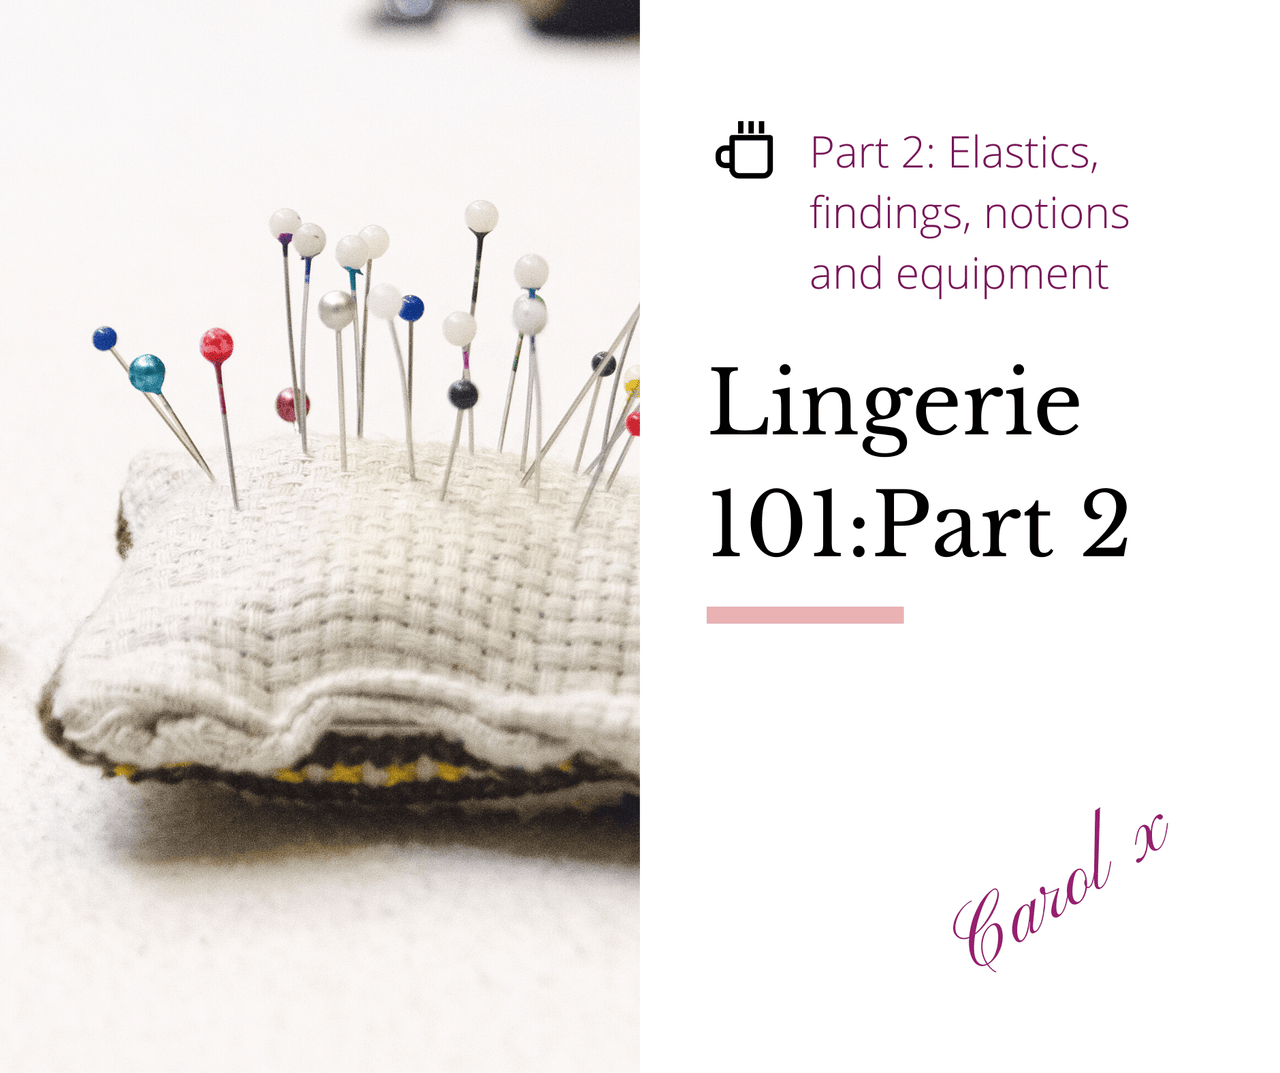 Lingerie 101 - Part 2: Elastics, findings, equiptment and notions - Fabriques